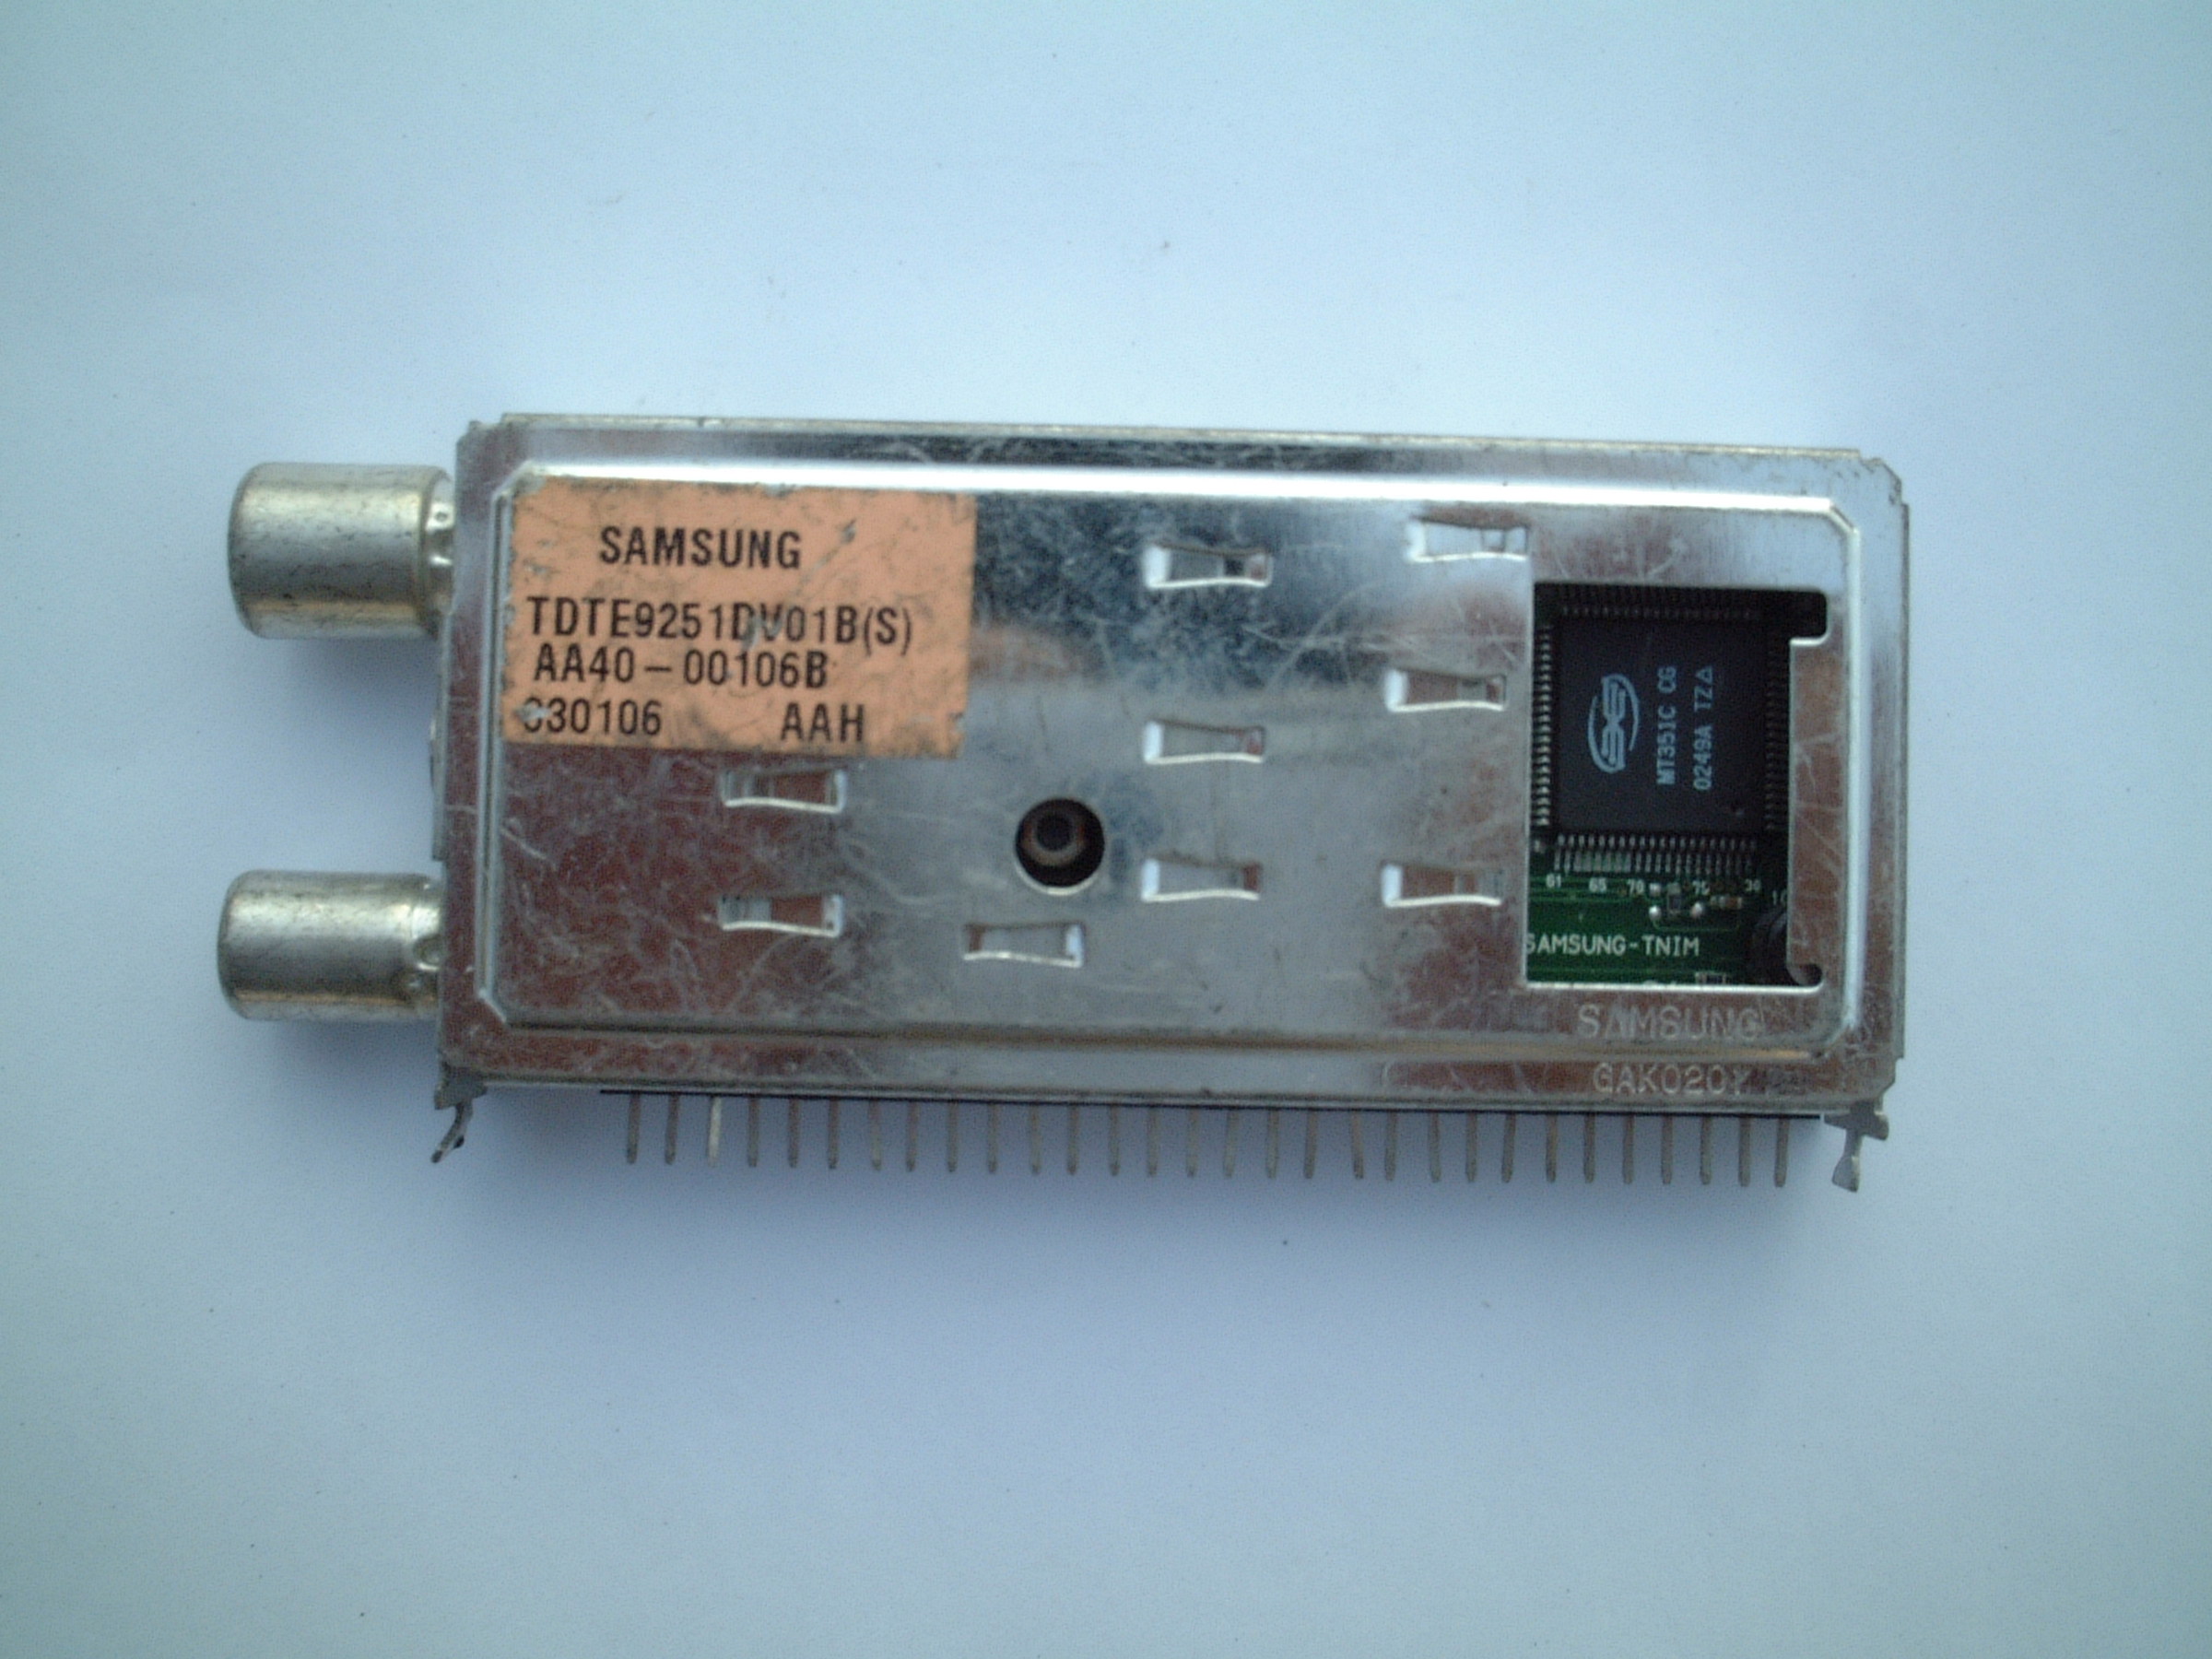 TDTE9251DV01B(S)数字调谐器